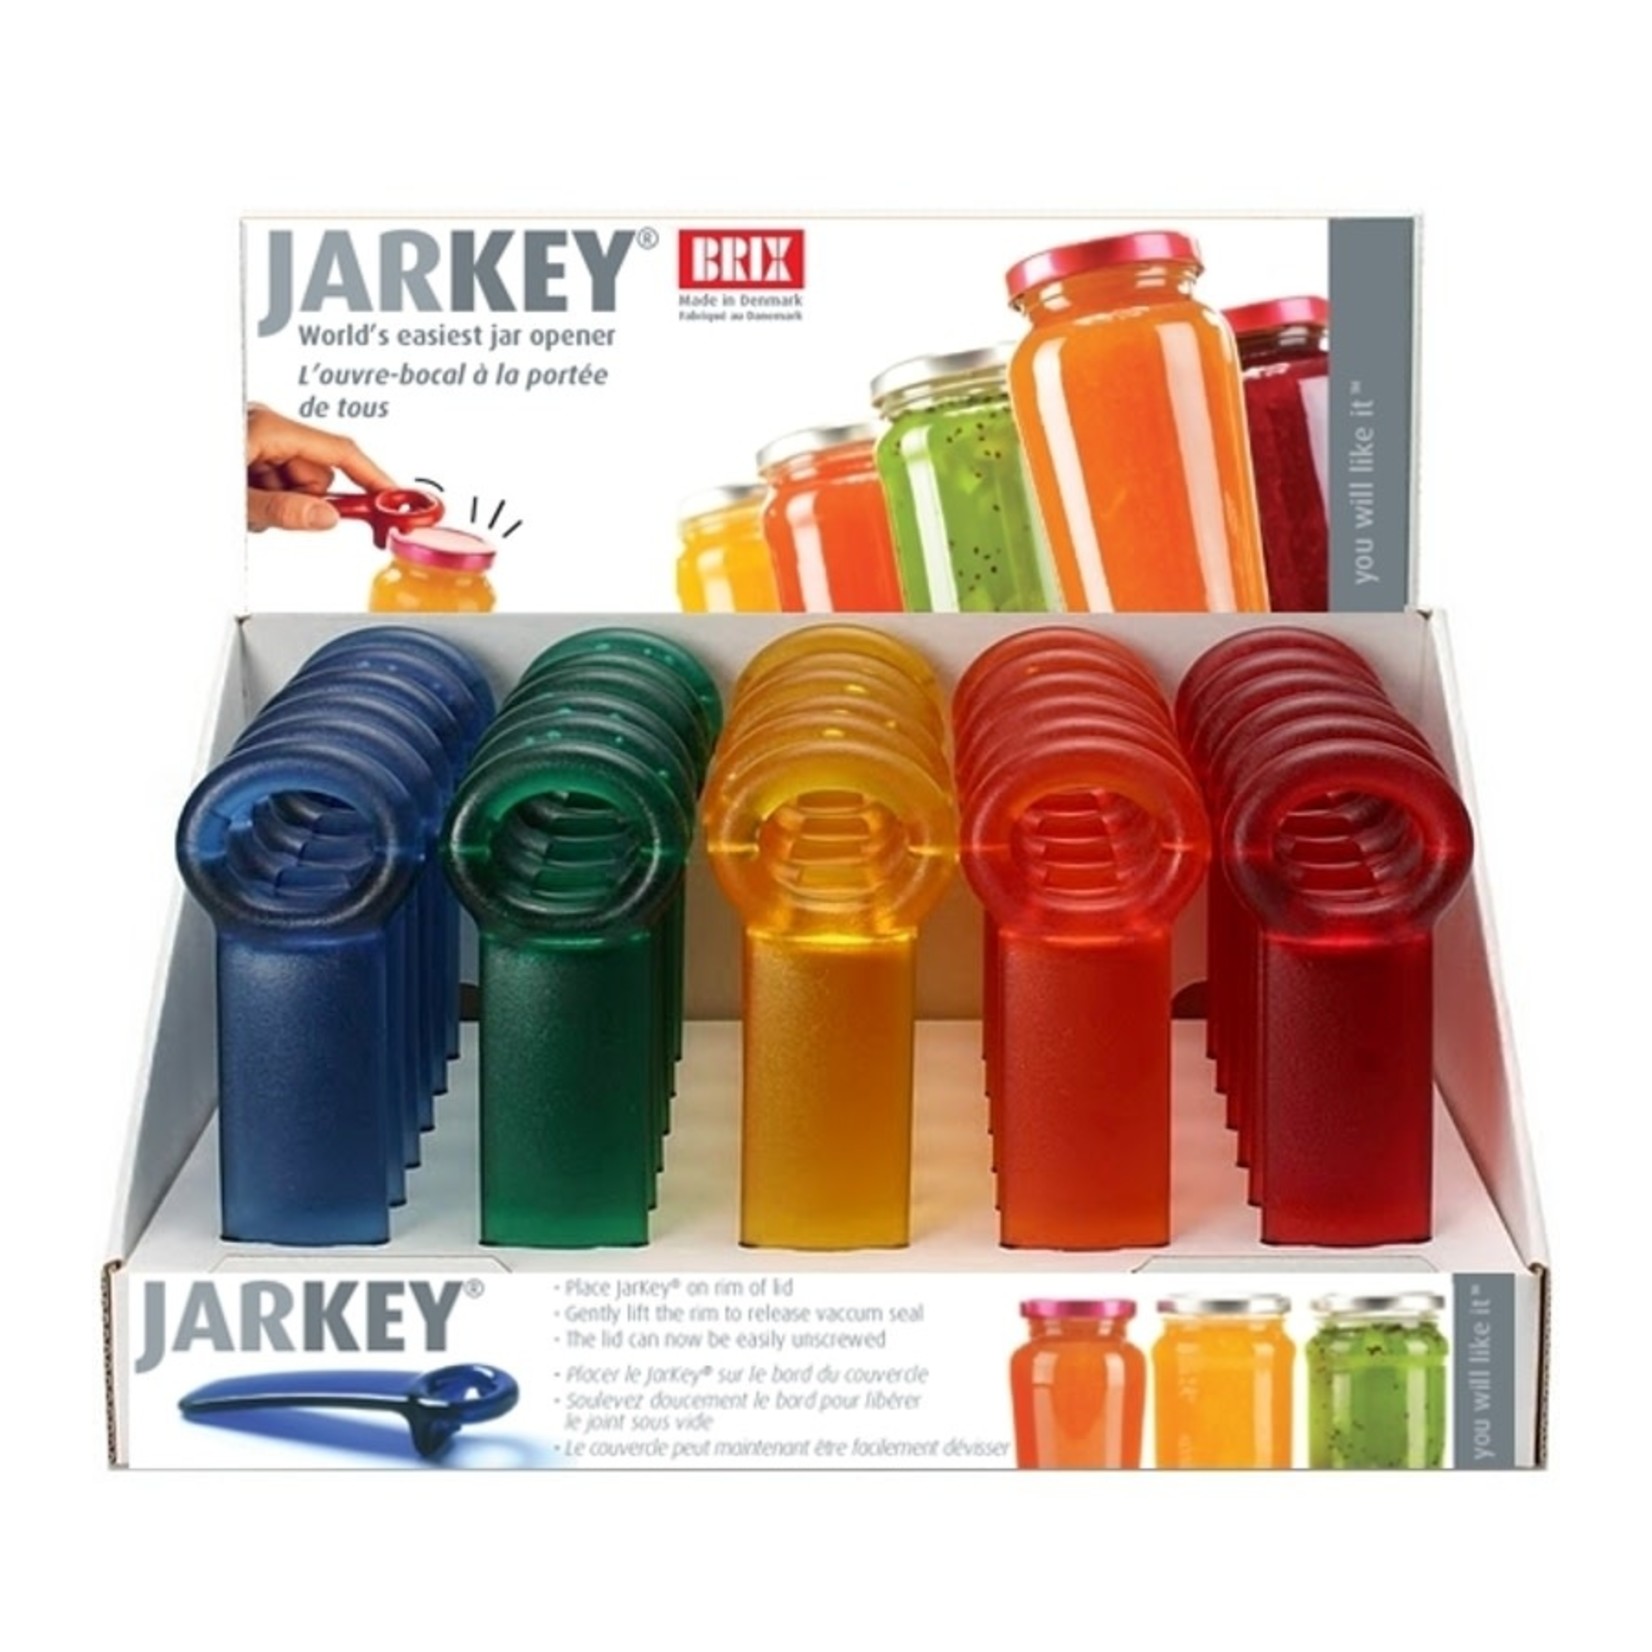 Jarkey ouvre-bocal couleurs assorties